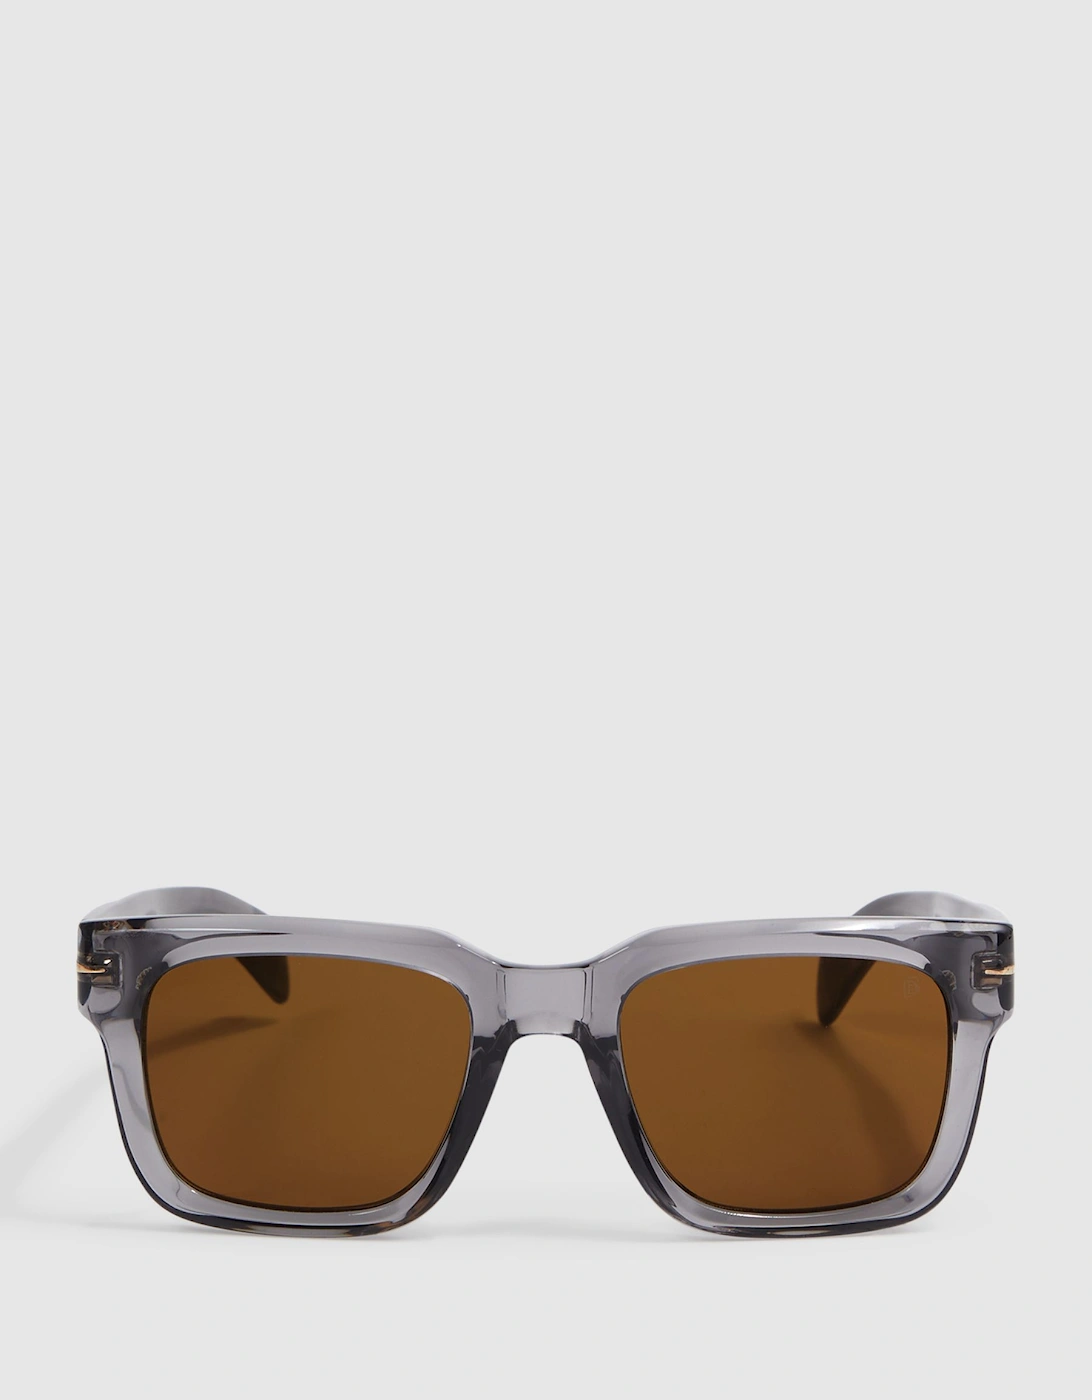 Eyewear by David Beckham Square Sunglasses, 2 of 1